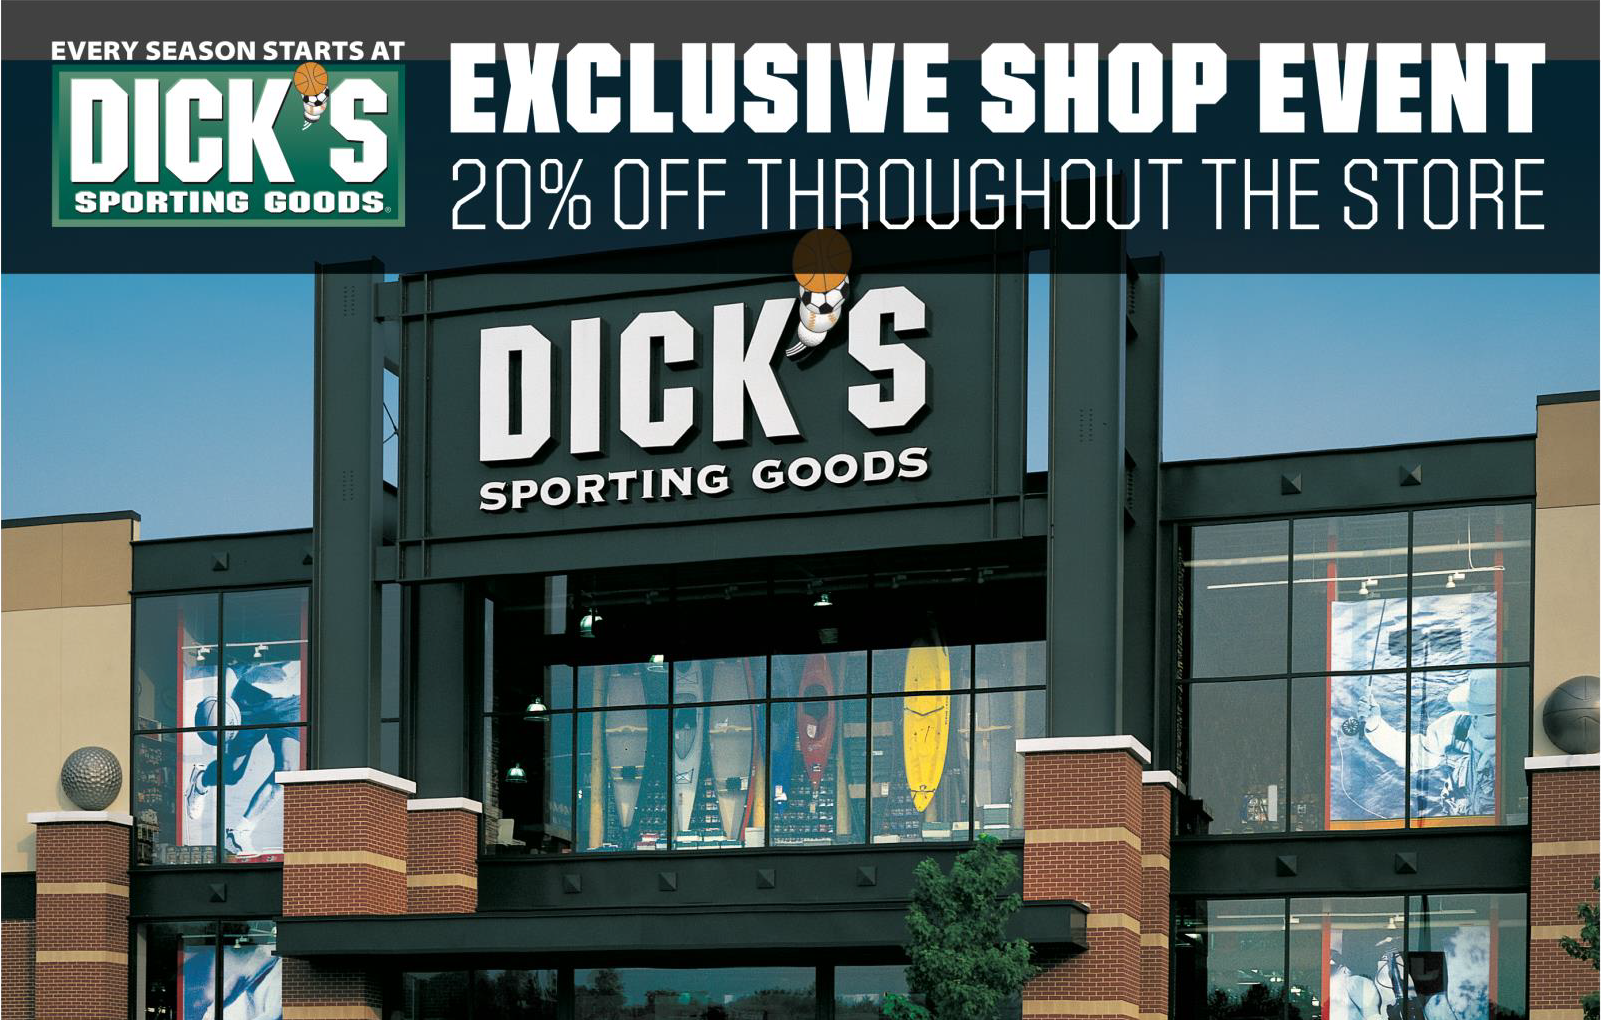 Dicks sporting goods new store location